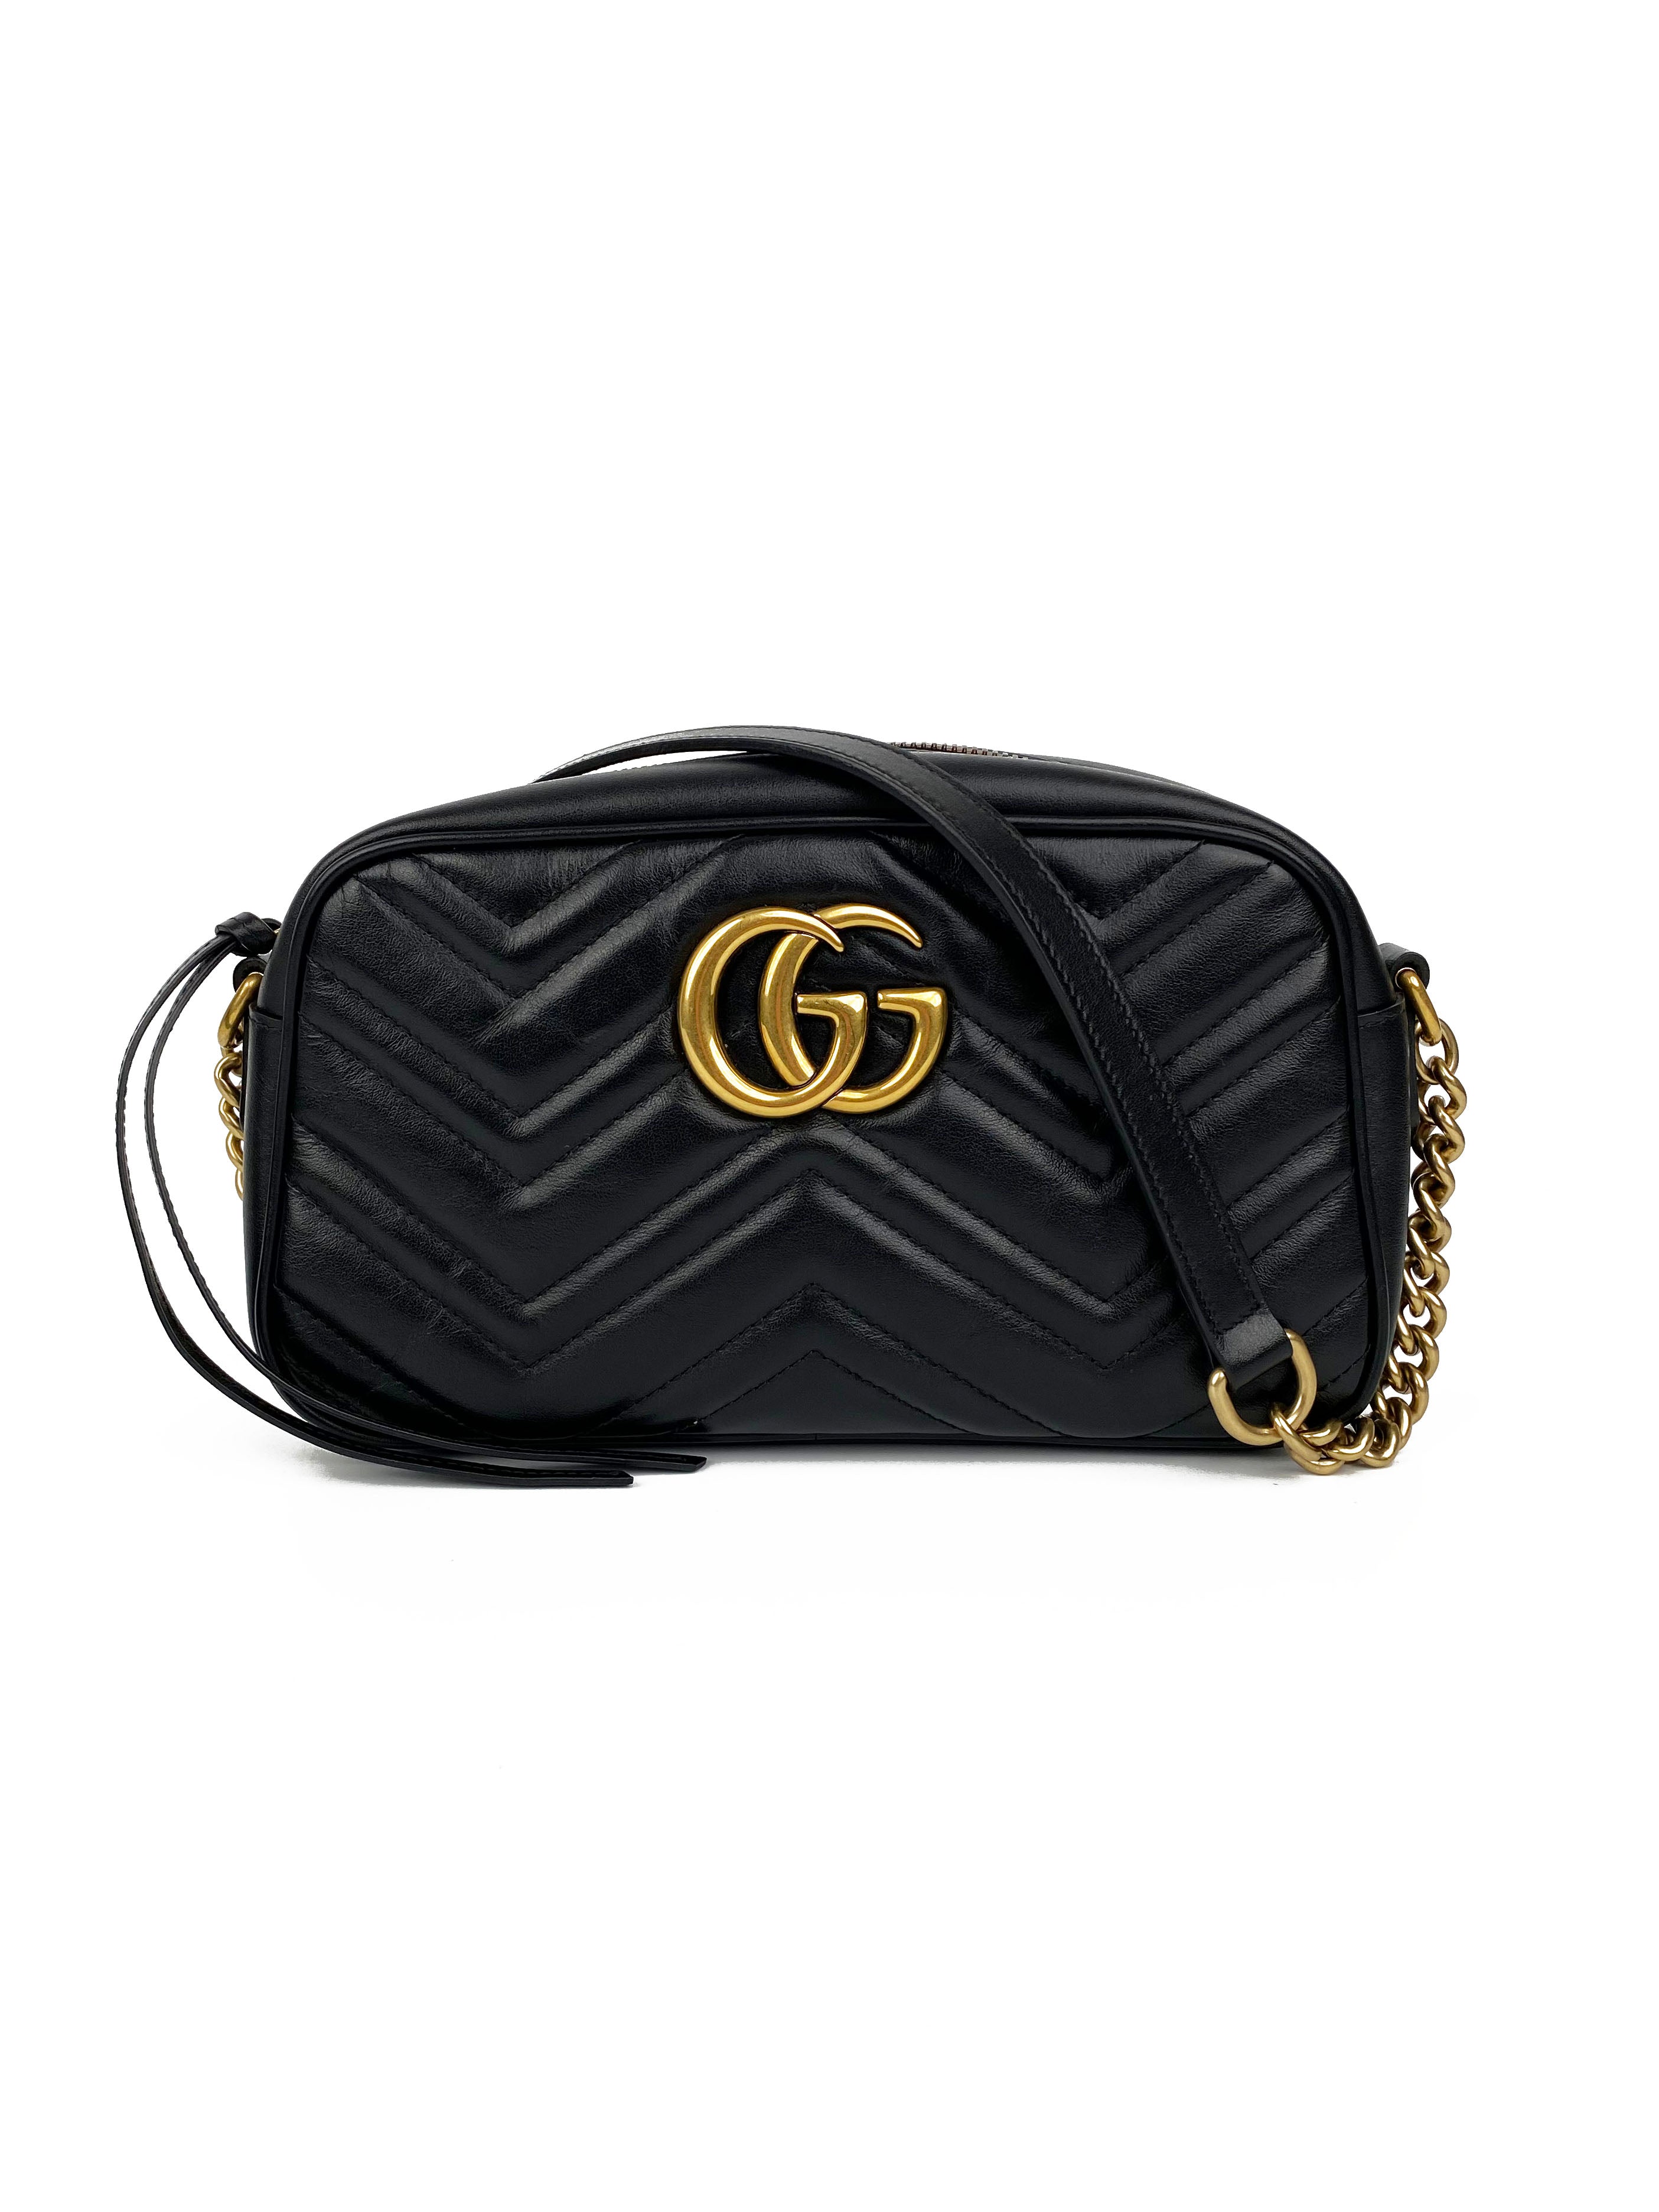 Gucci Small Black GG Marmont Shoulder Bag